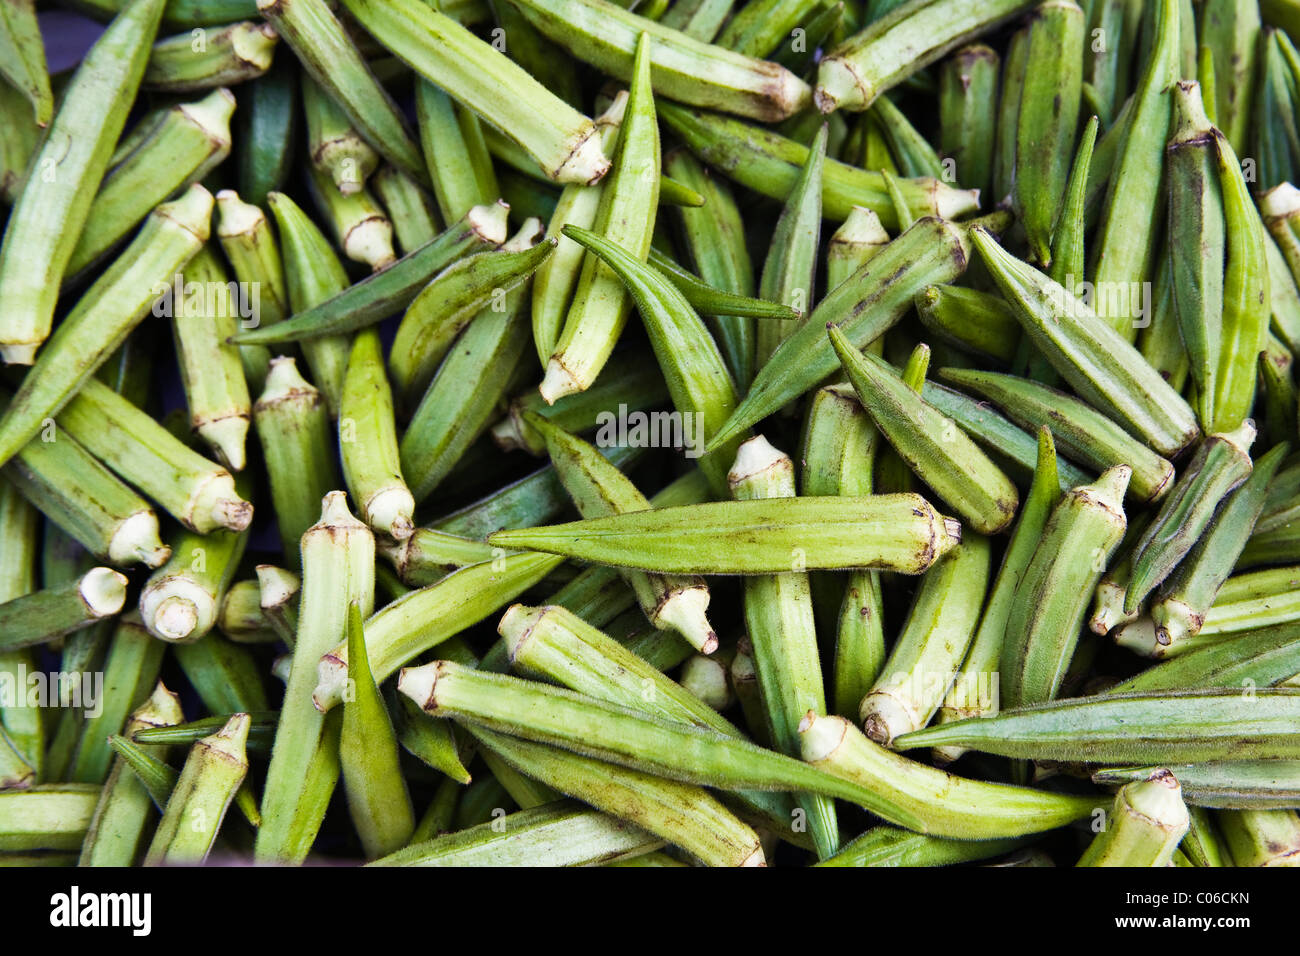 Okra (Abelmoschus esculentus) vegetable Stock Photo